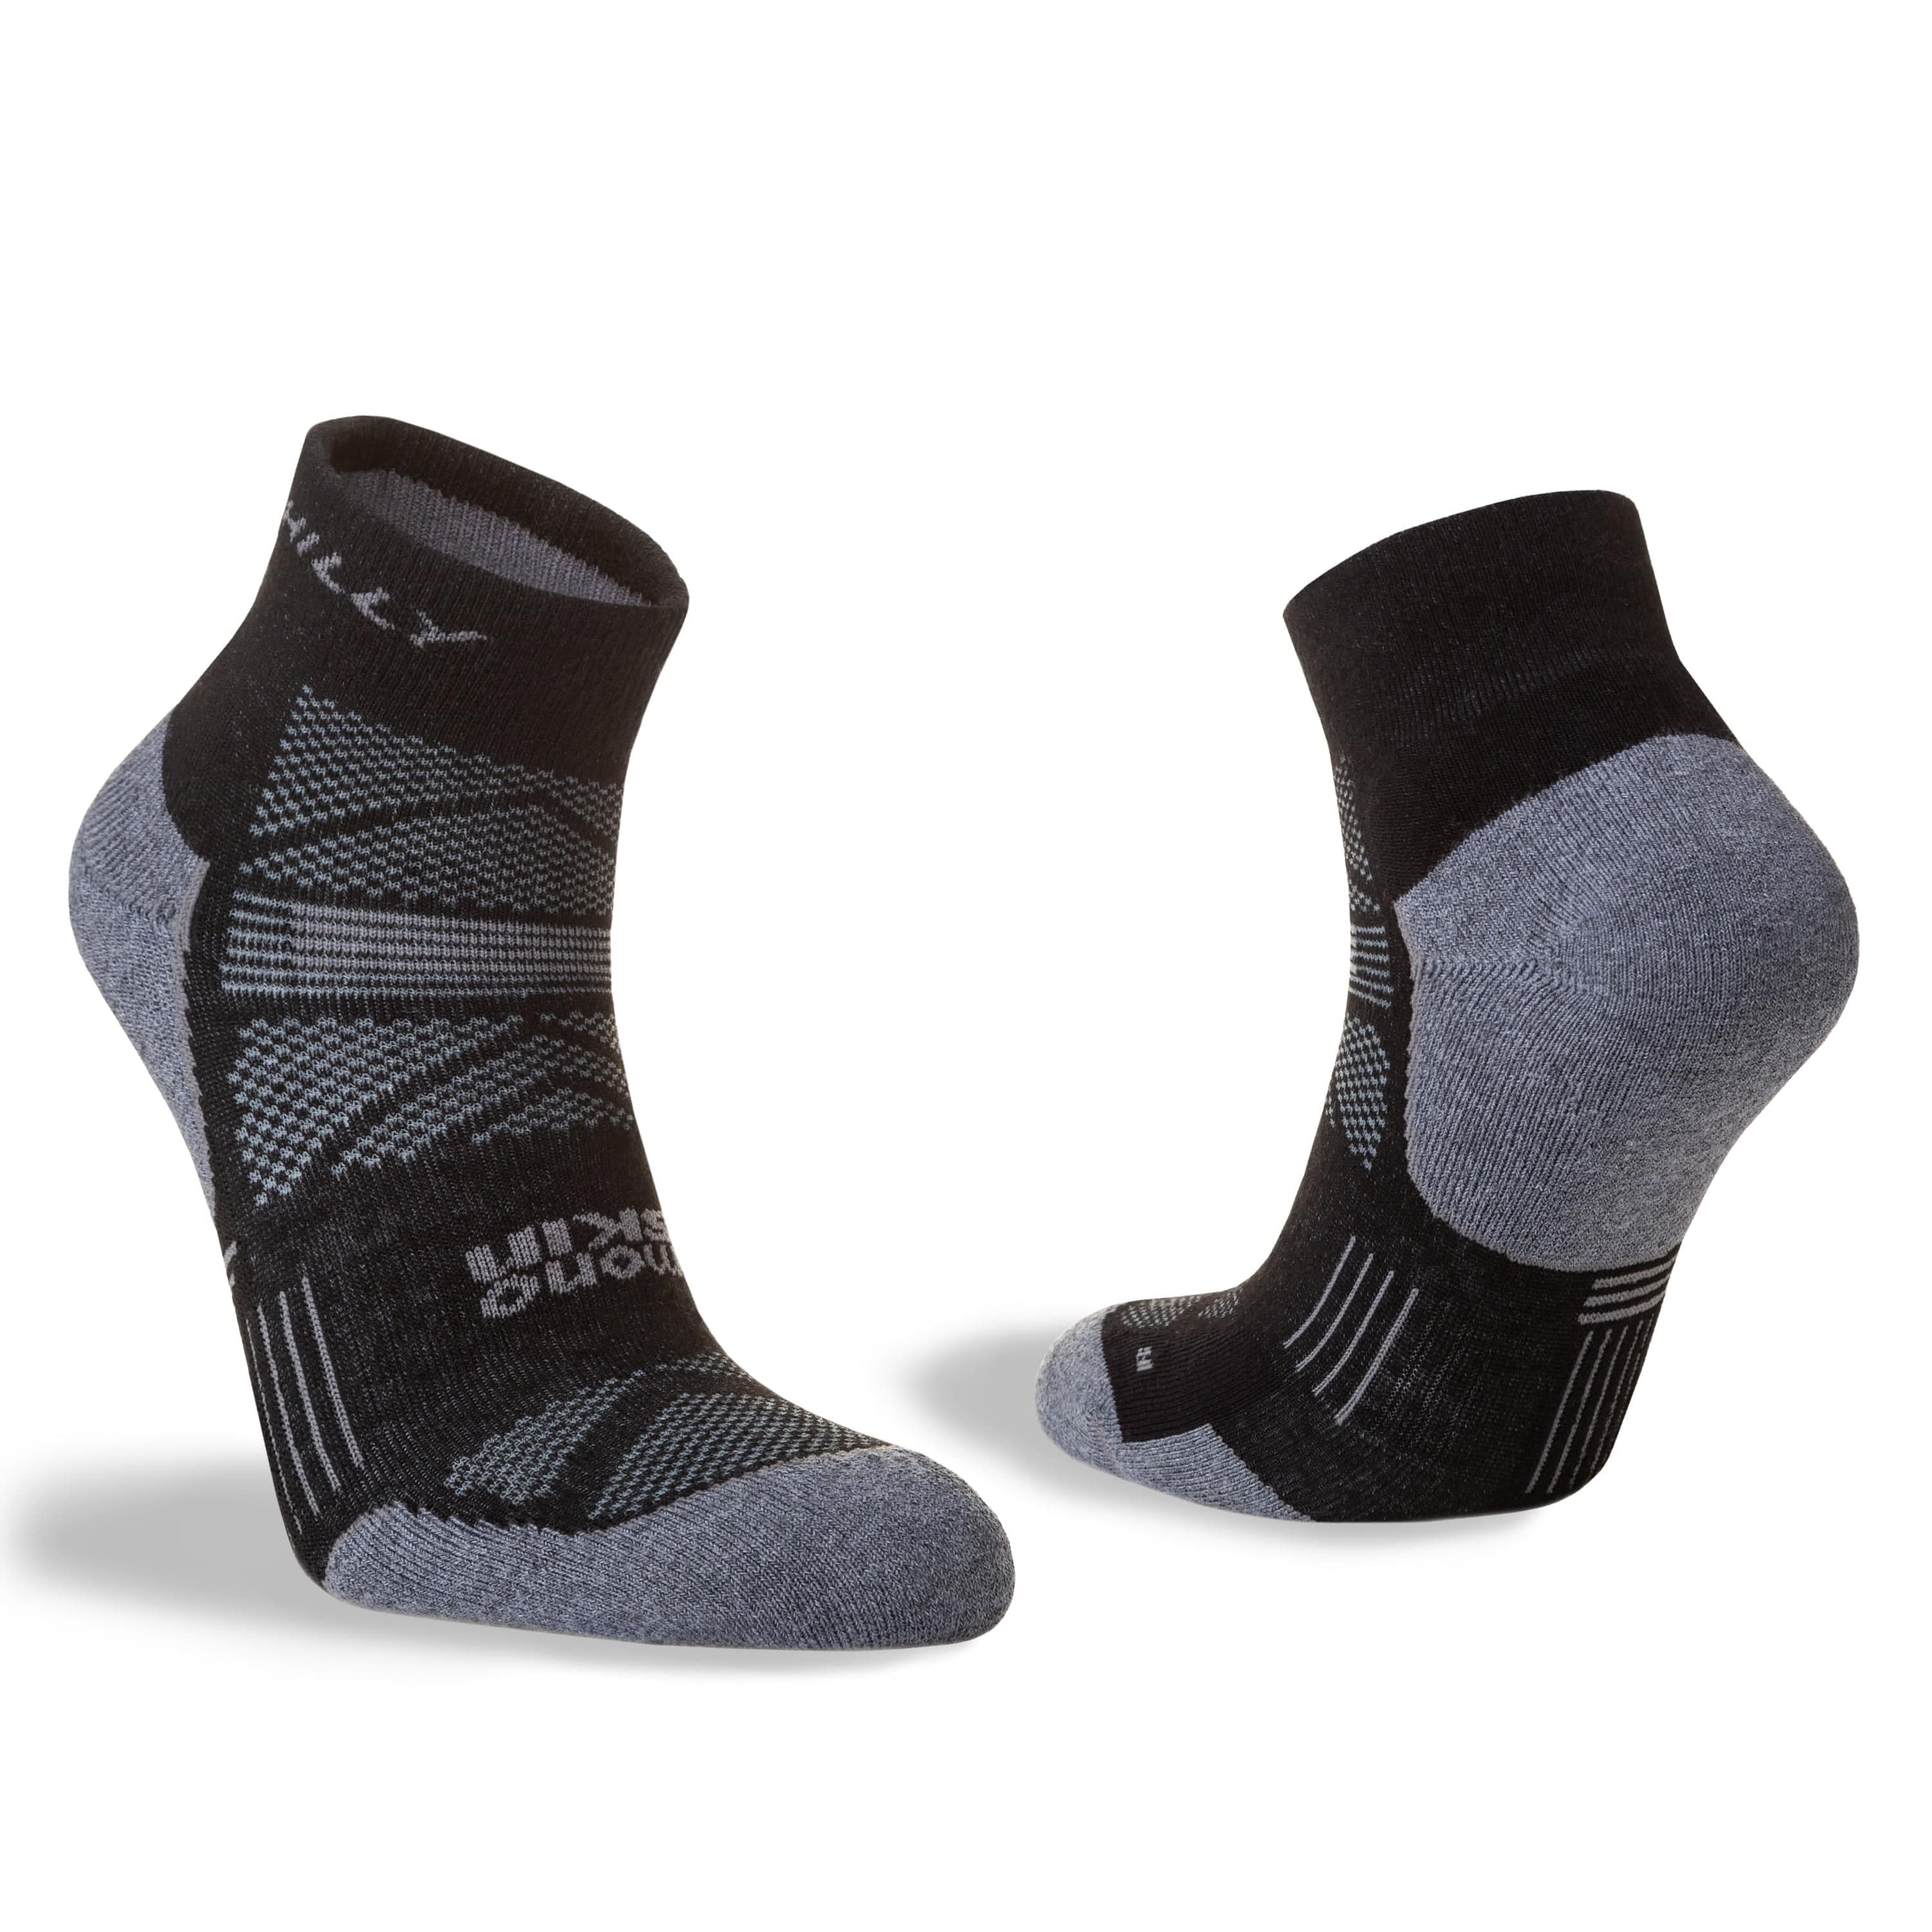 Hilly Supreme Anklet - Medium Cushioning - Black/Grey Marl